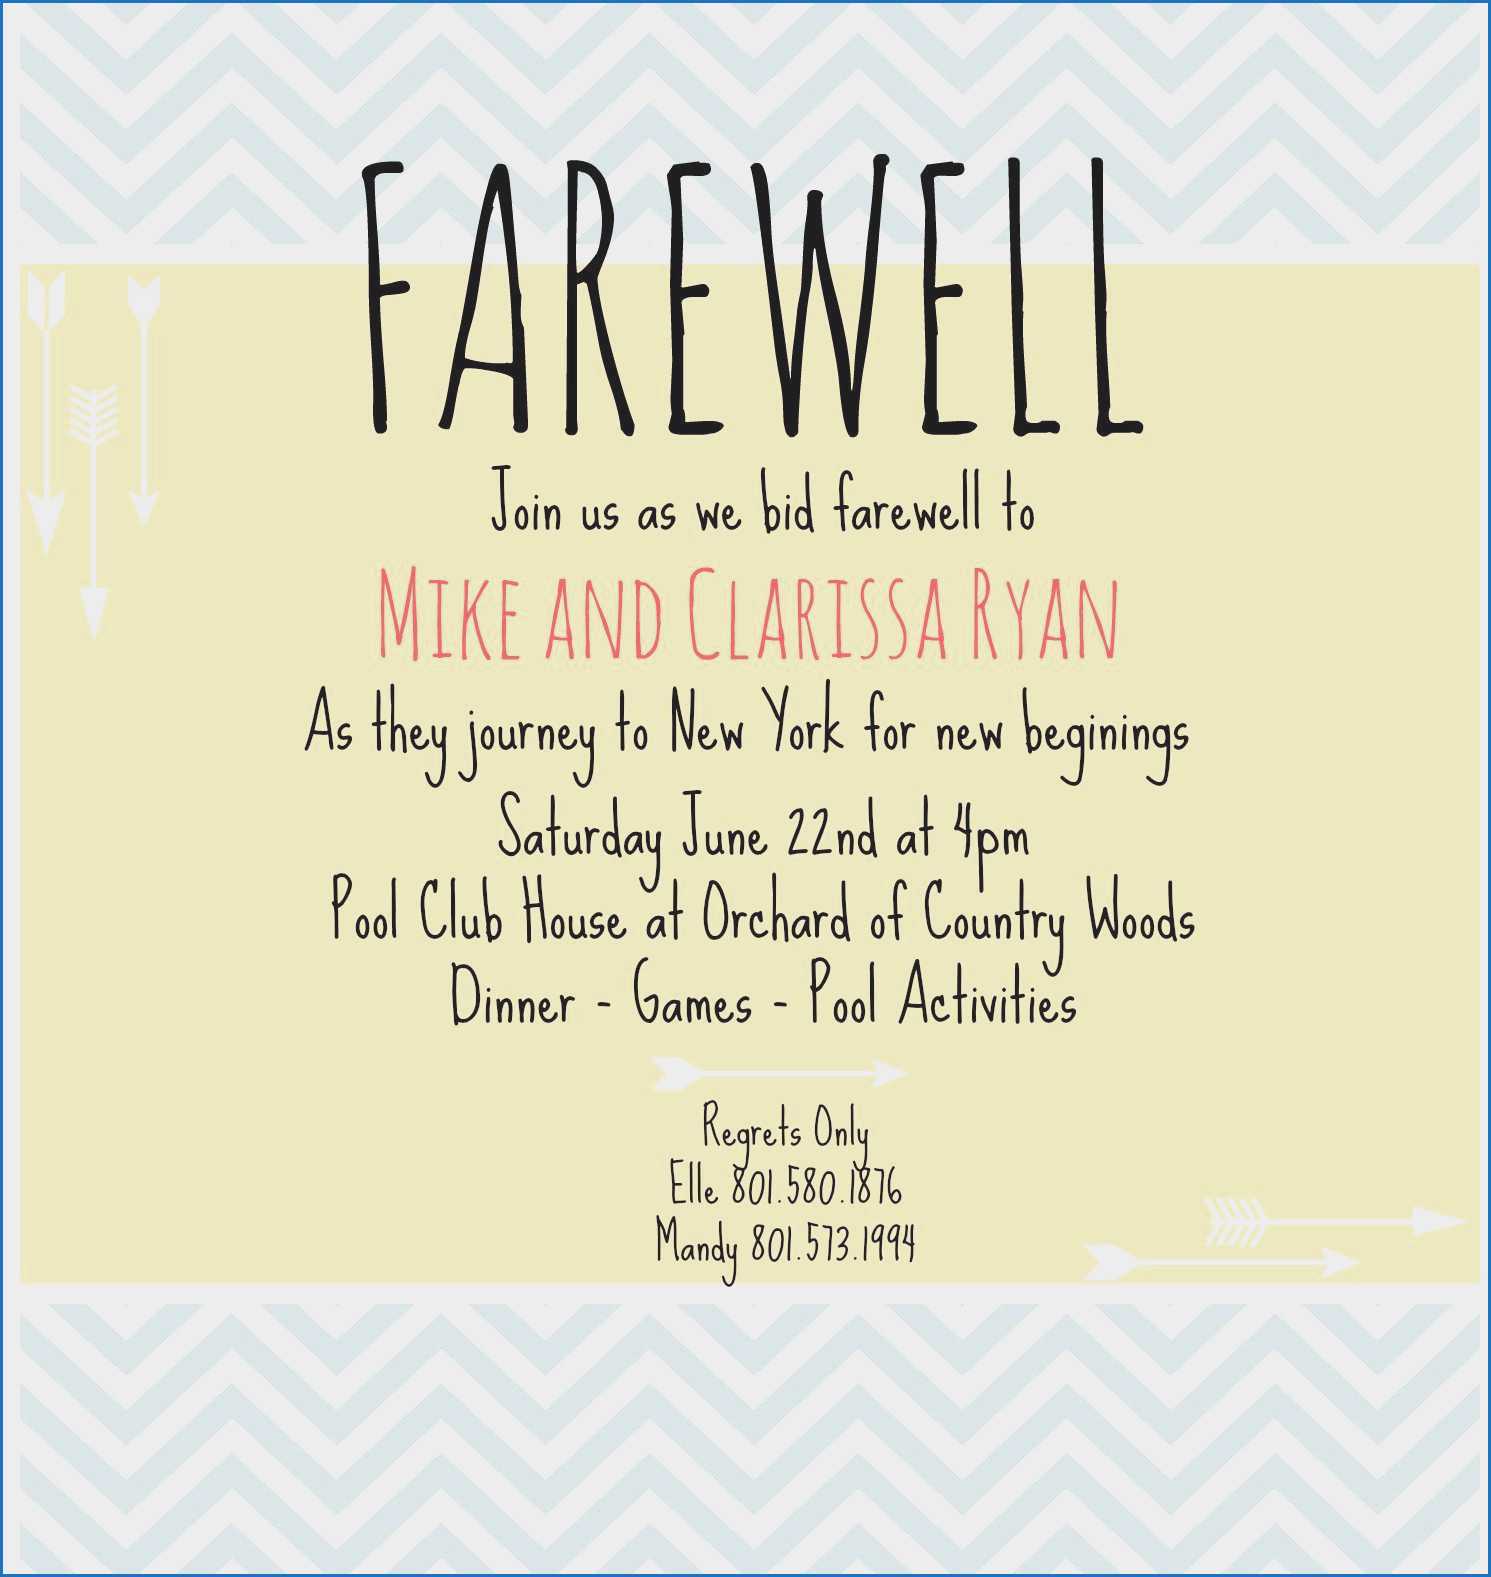 757 Free Farewell Invitation Template Word – Invitations With Regard To Farewell Card Template Word